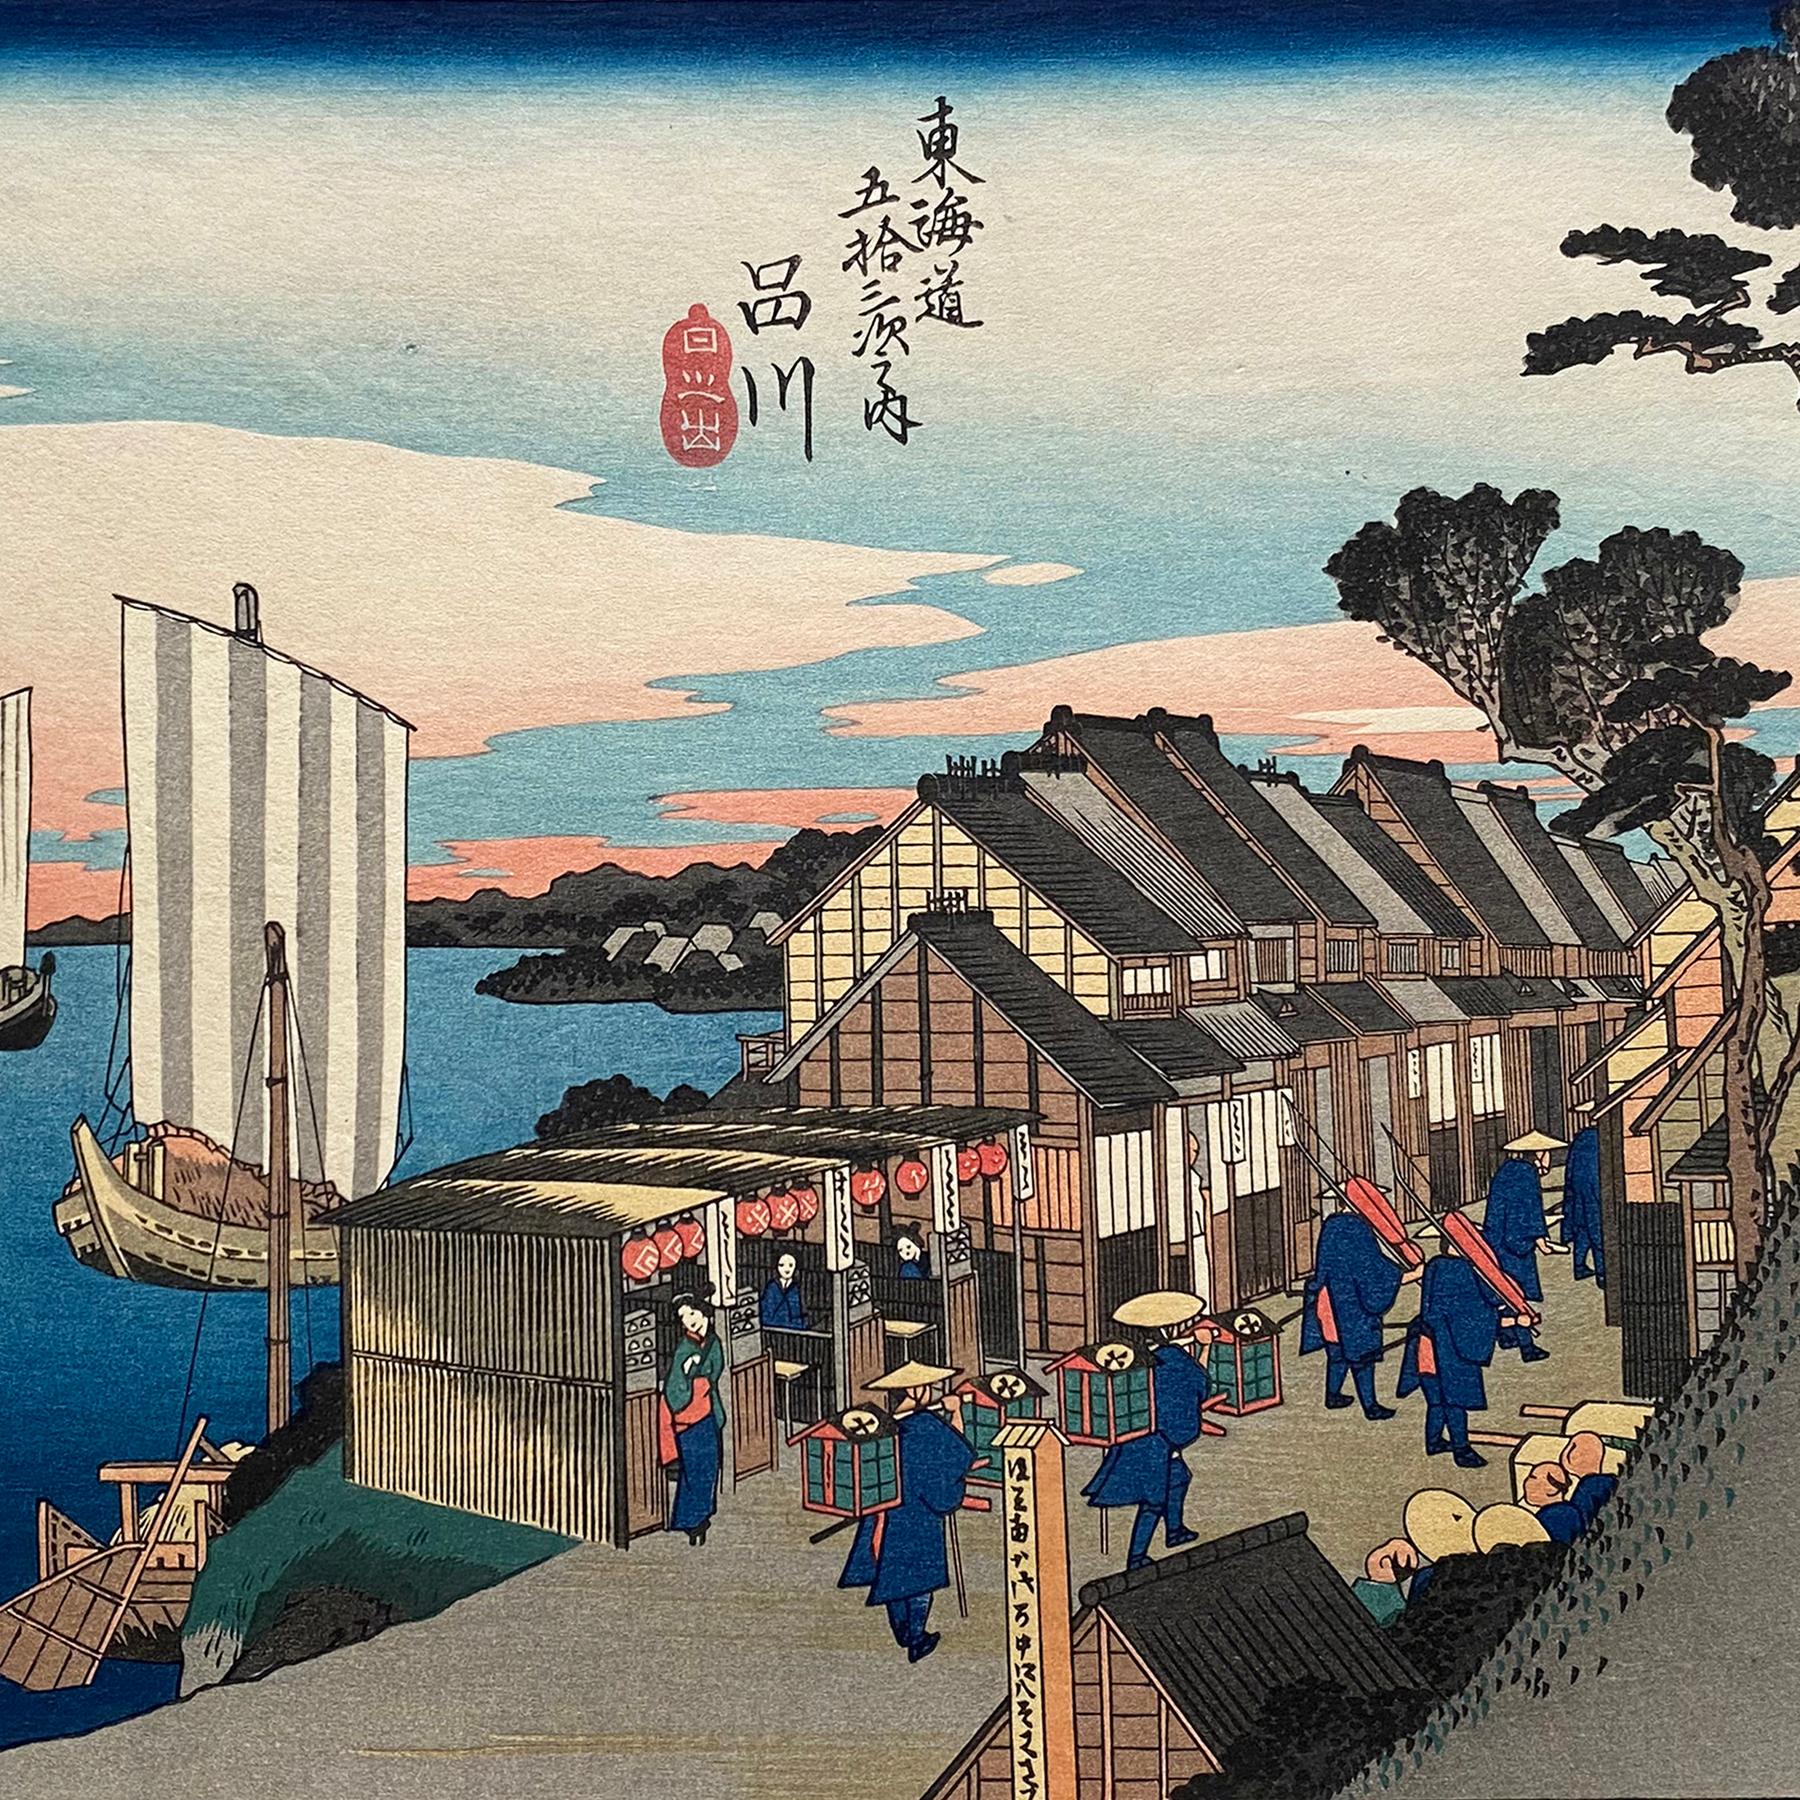 'Shinagawa Sunrise', After Utagawa Hiroshige 歌川廣重, Ukiyo-e Woodblock, Tokaido - Beige Landscape Print by Utagawa Hiroshige (Ando Hiroshige)